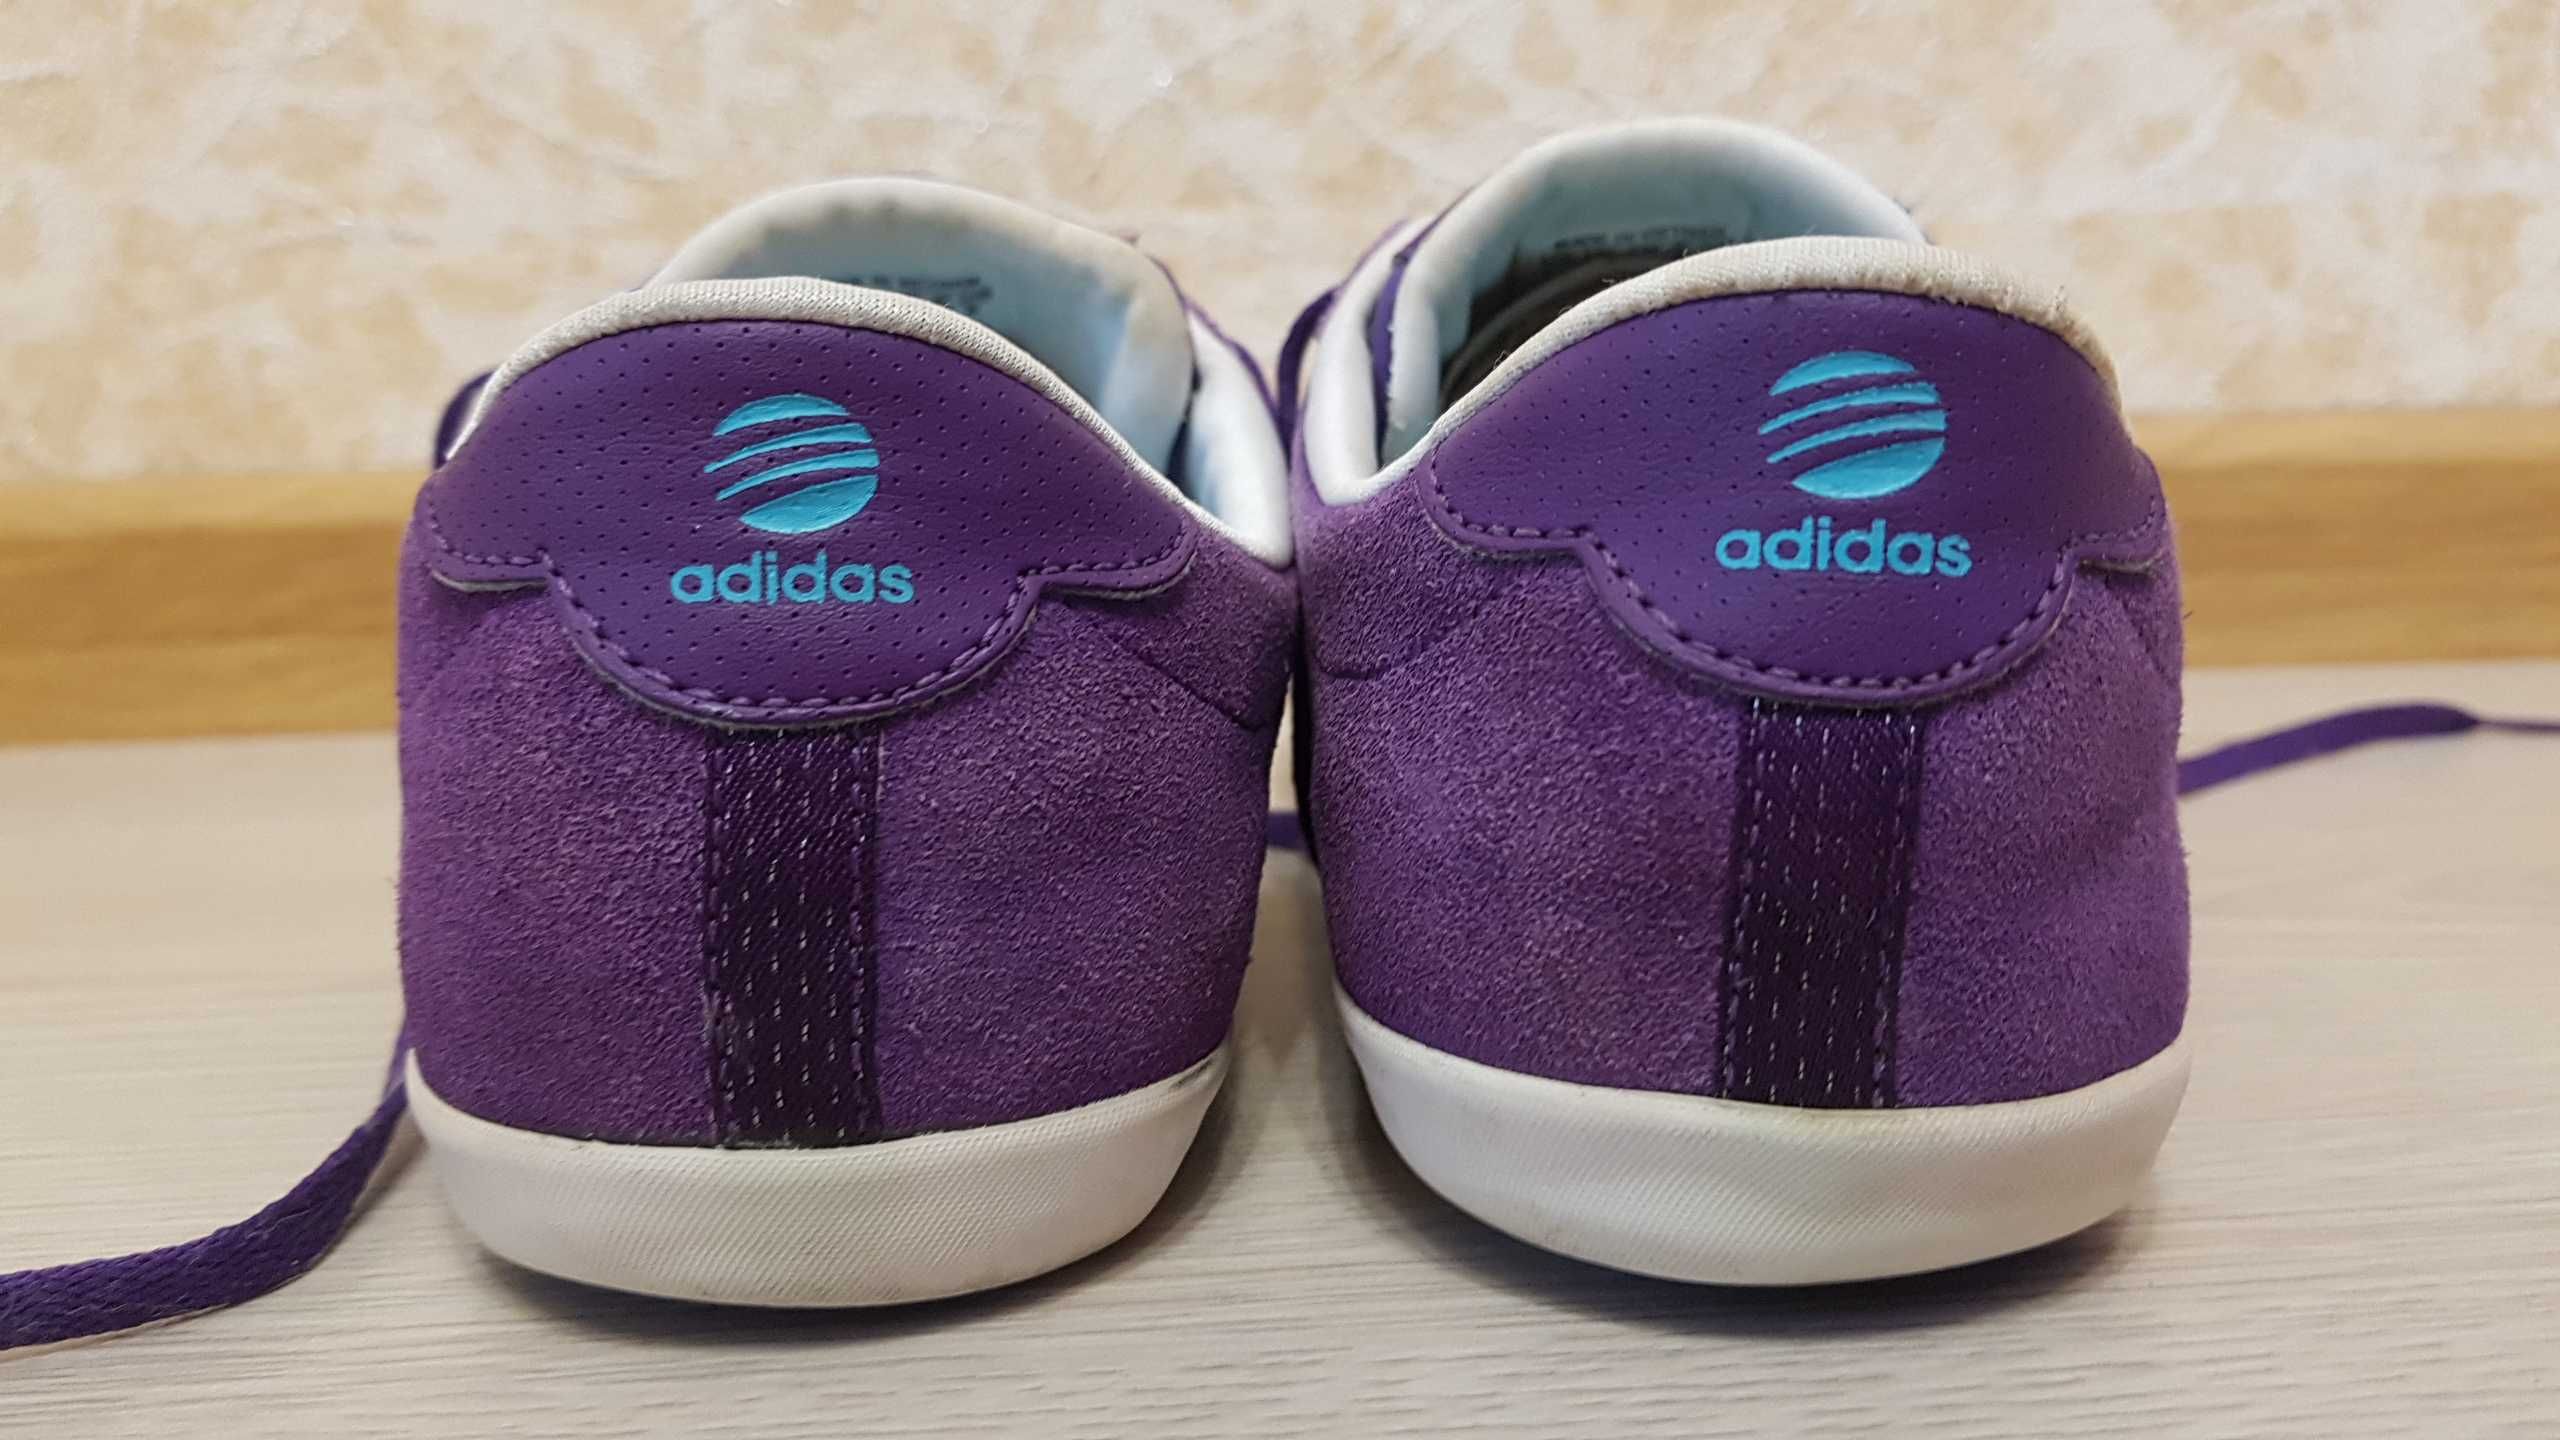 Кроссовки Adidas Neo Purple (40р. 26см)Original,состояние